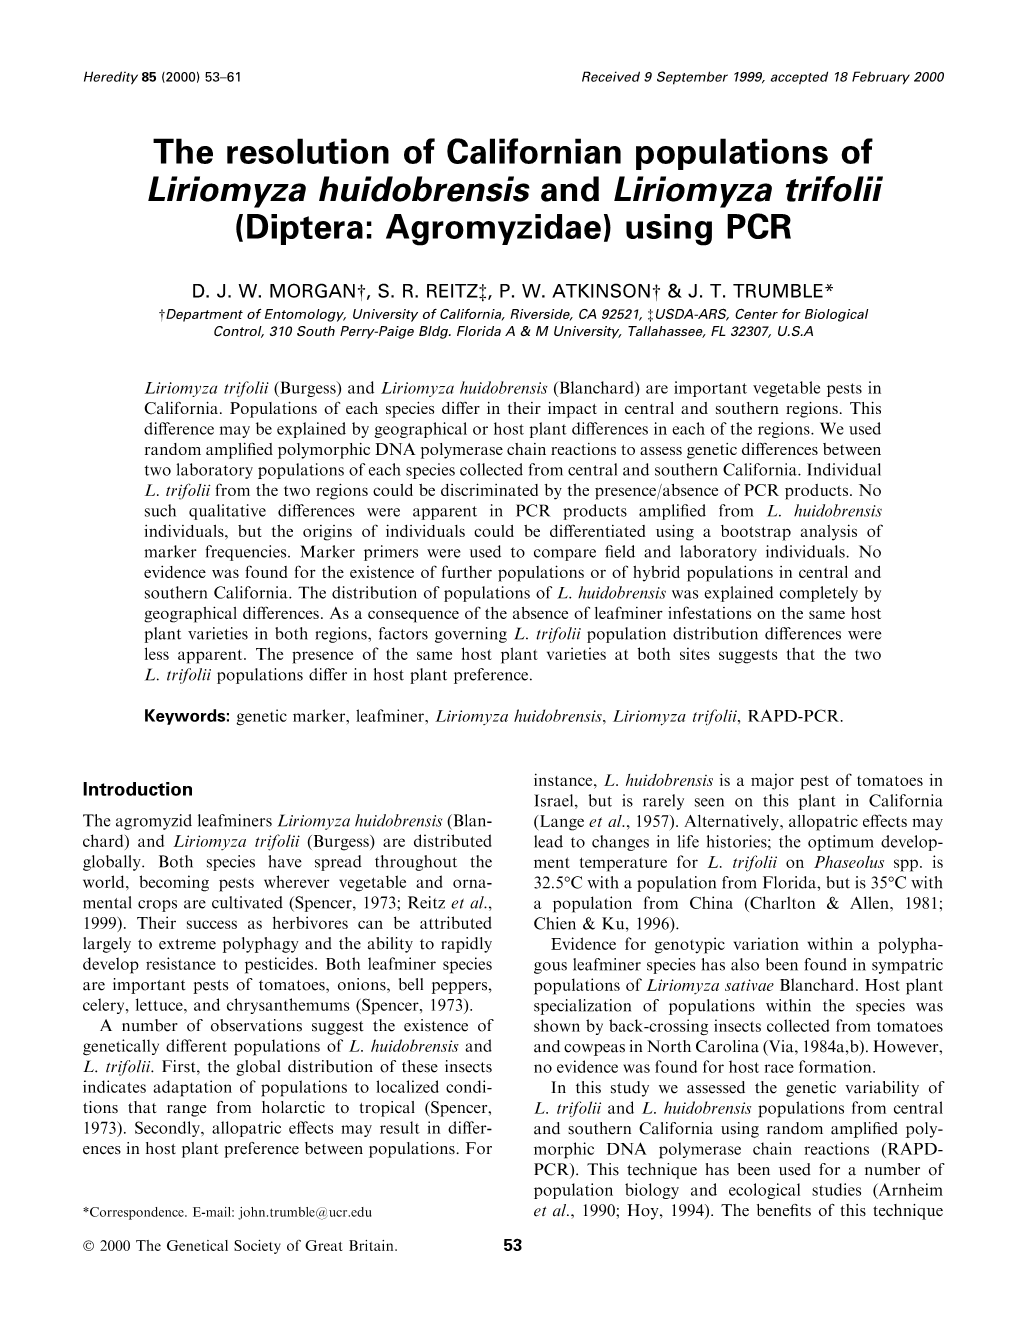 The Resolution of Californian Populations of Liriomyza Huidobrensis and Liriomyza Trifolii (Diptera: Agromyzidae) Using PCR